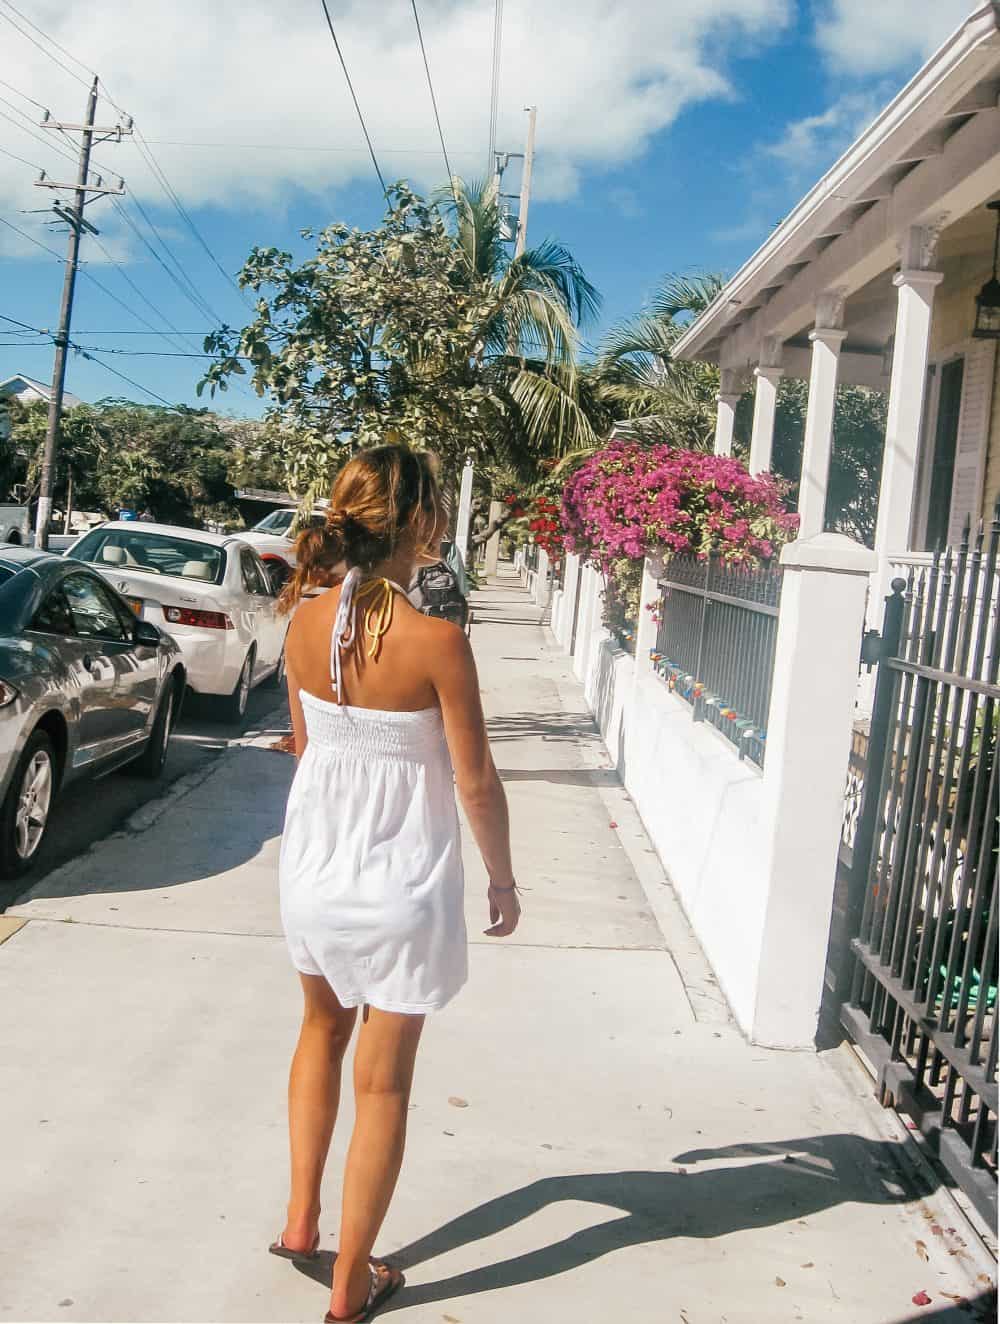 Walking around Key West in Florida